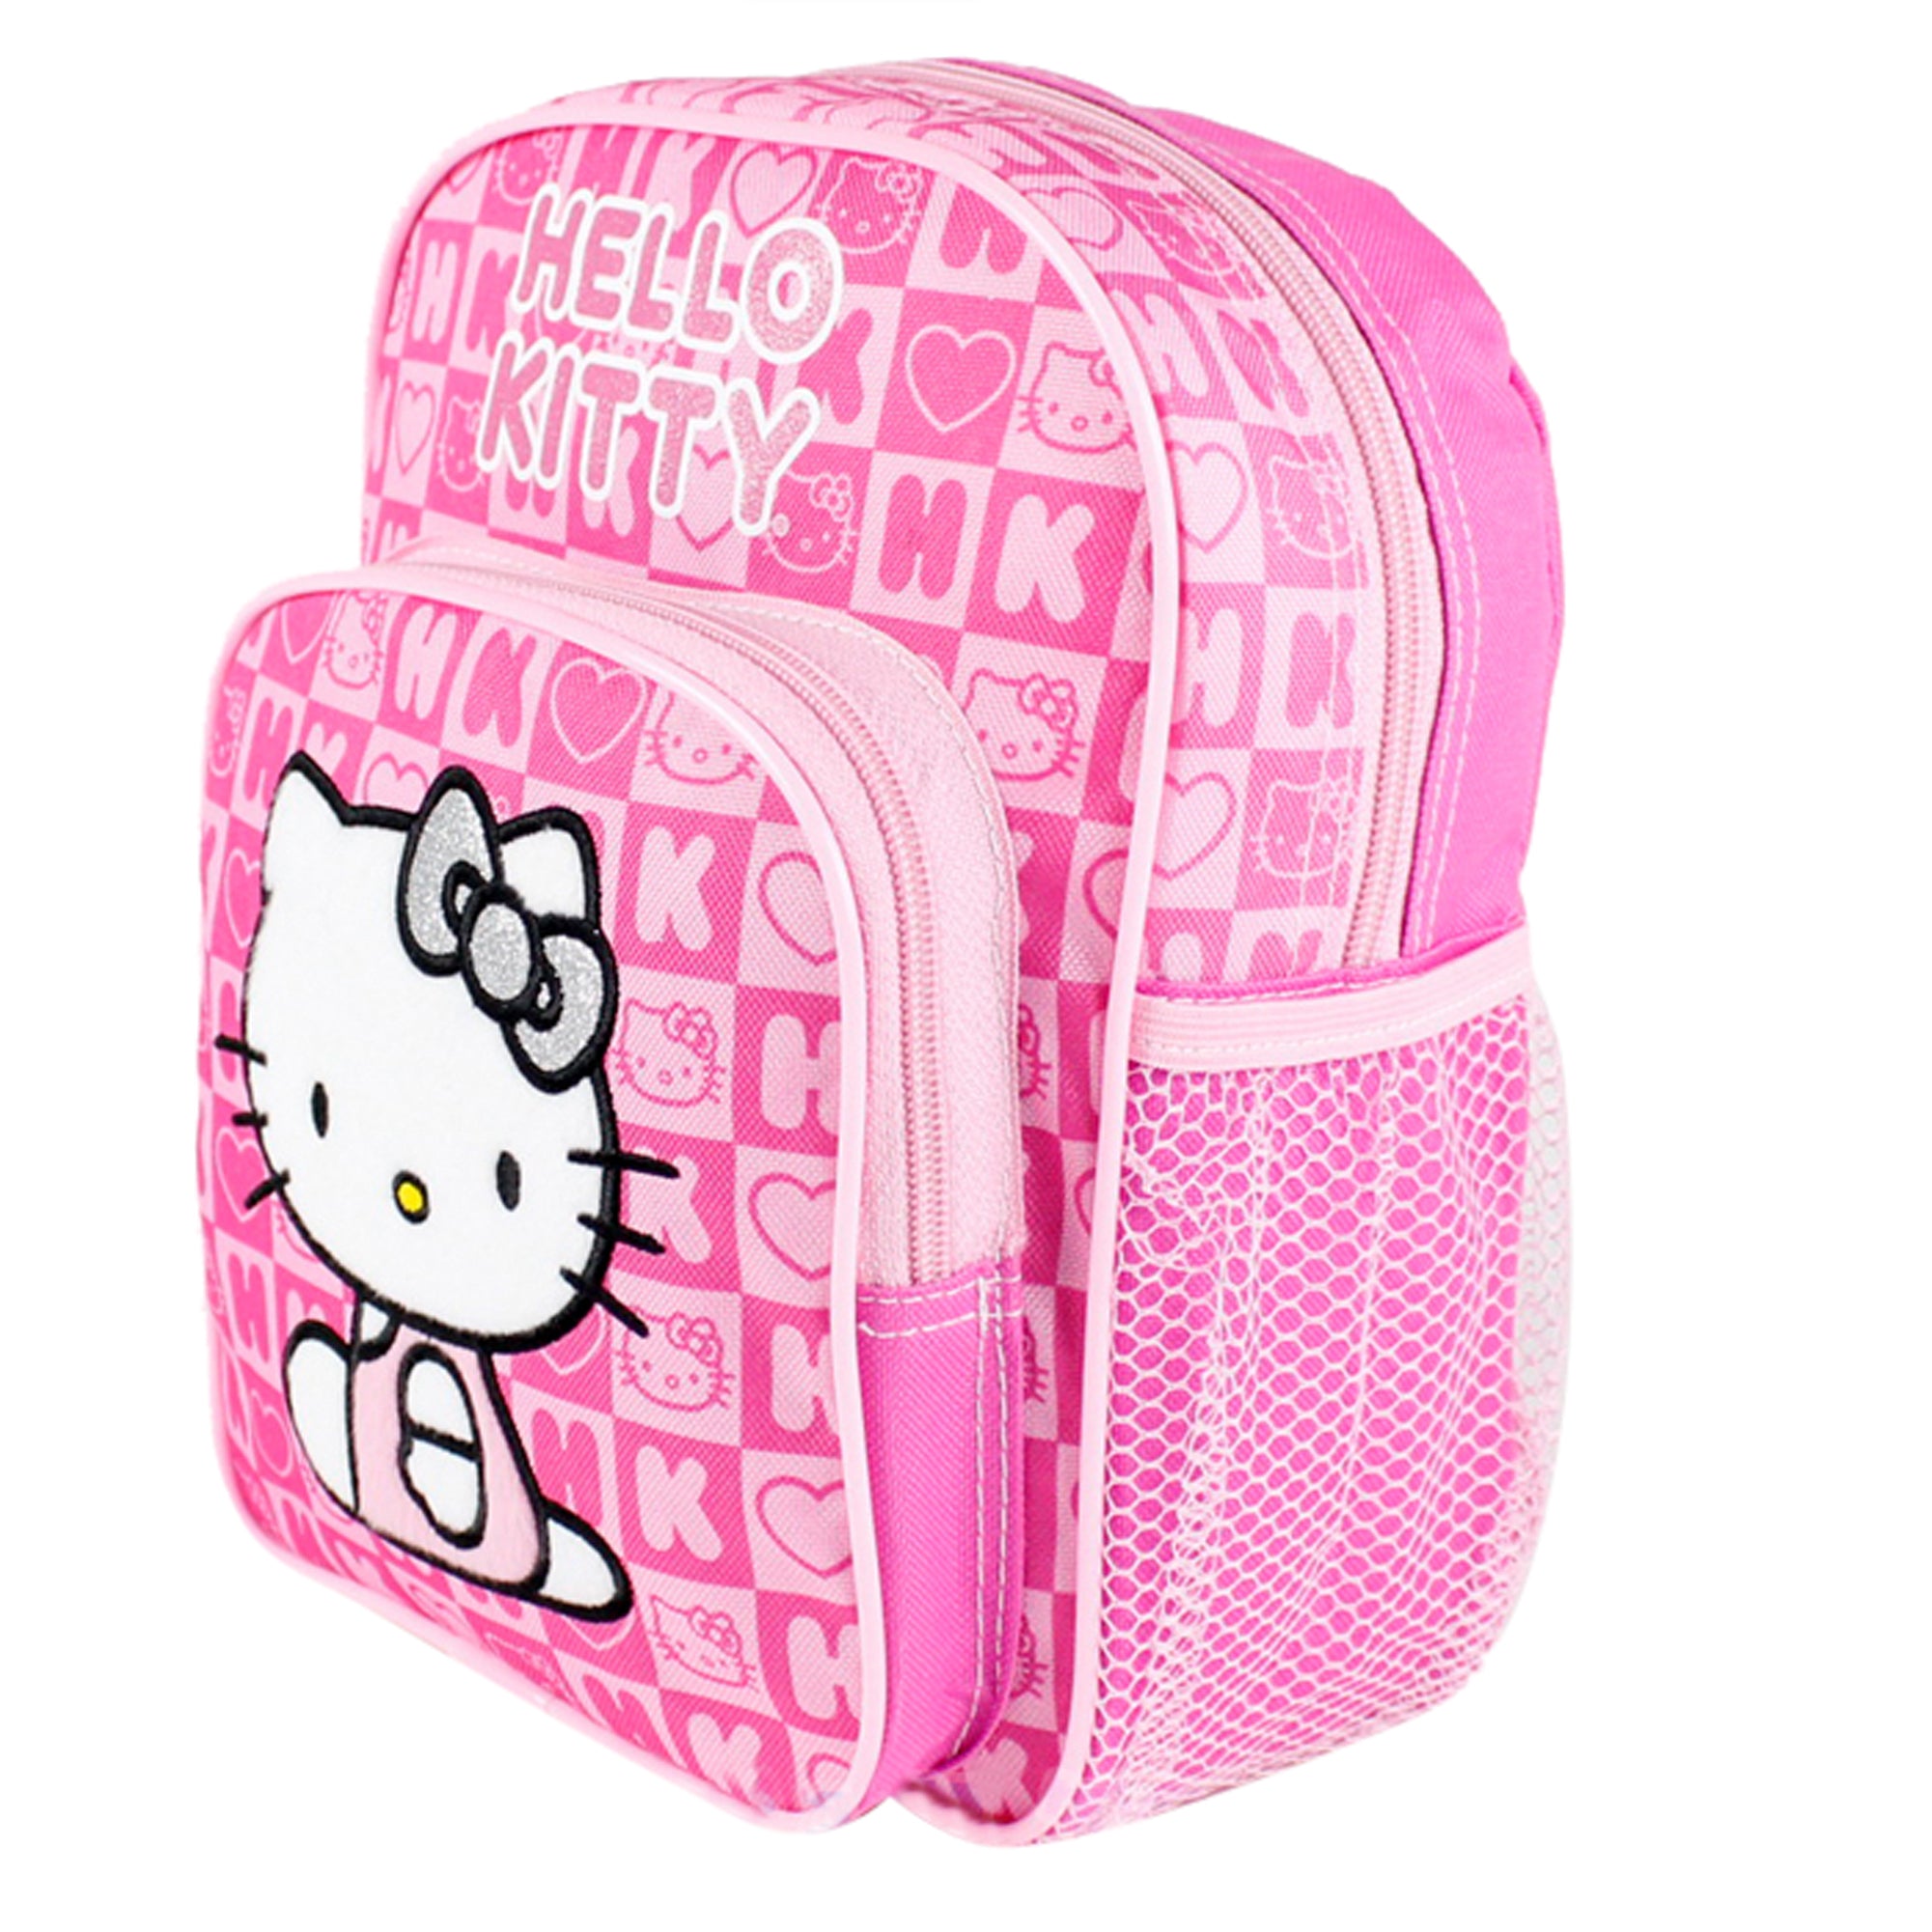 Mini Backpack - - Pink Box Checker New School Bag Book Girls 82350 - image 3 of 4